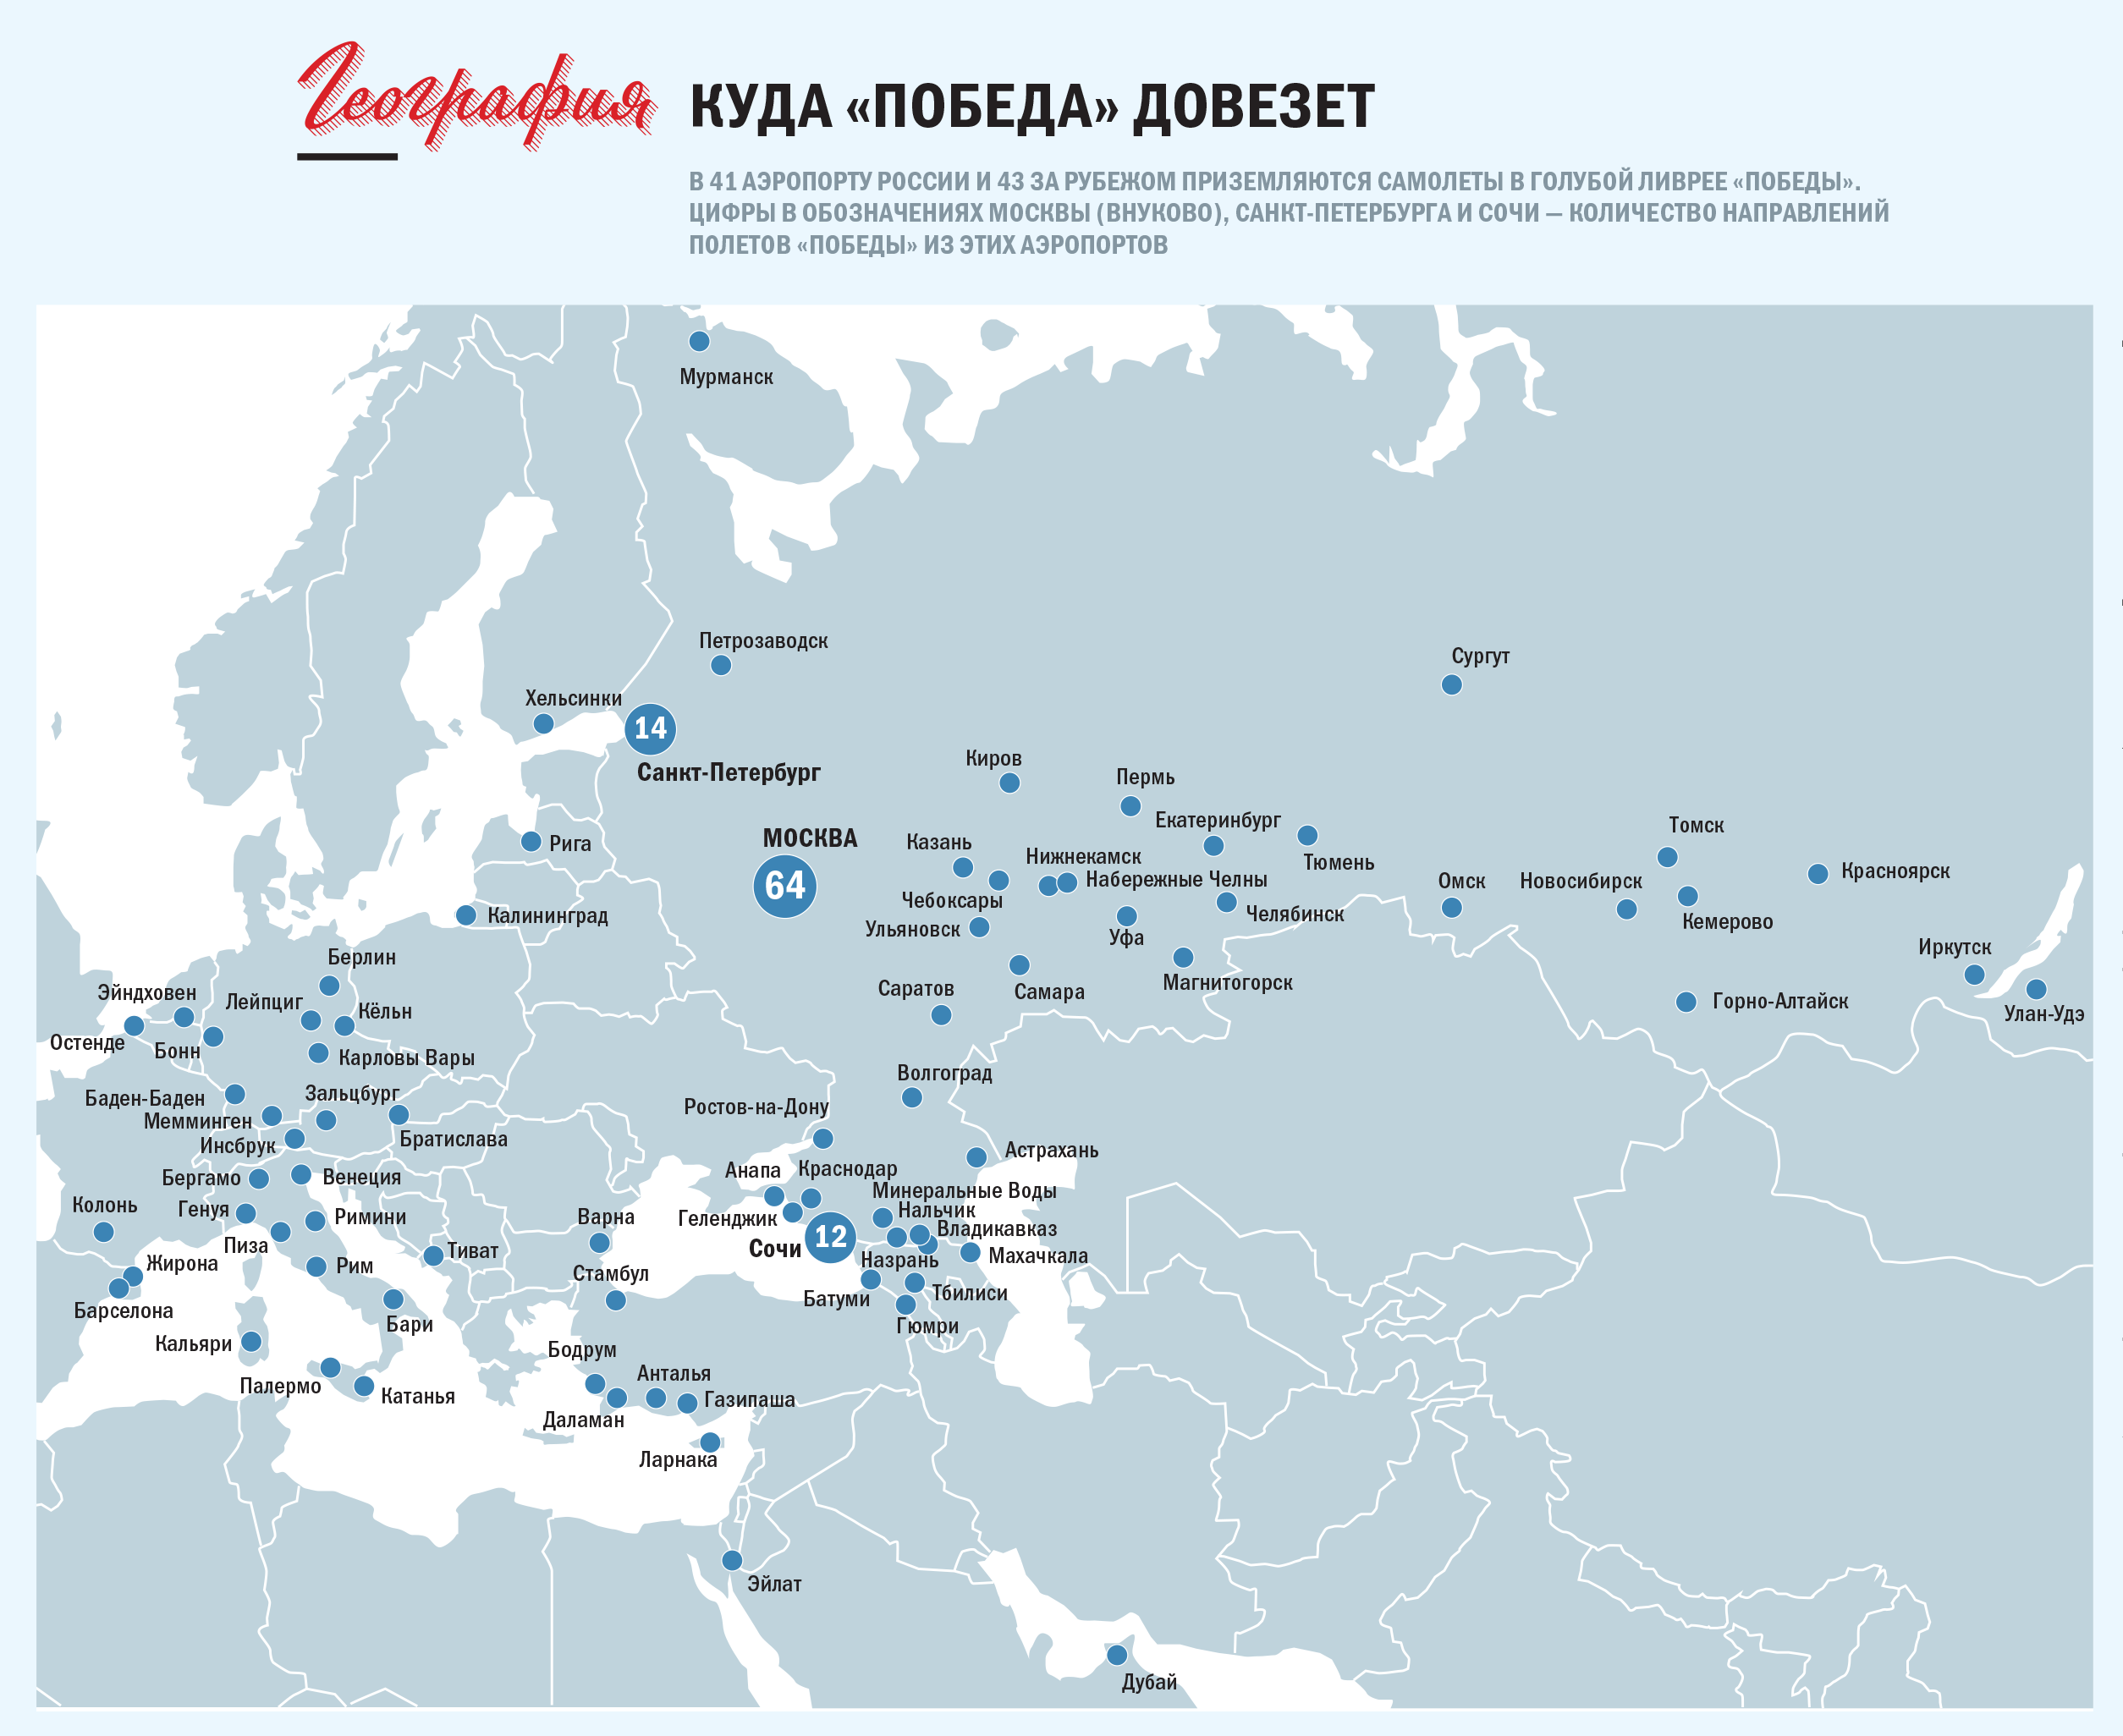 Куда летает "победа": маршруты авиакомпании по россии